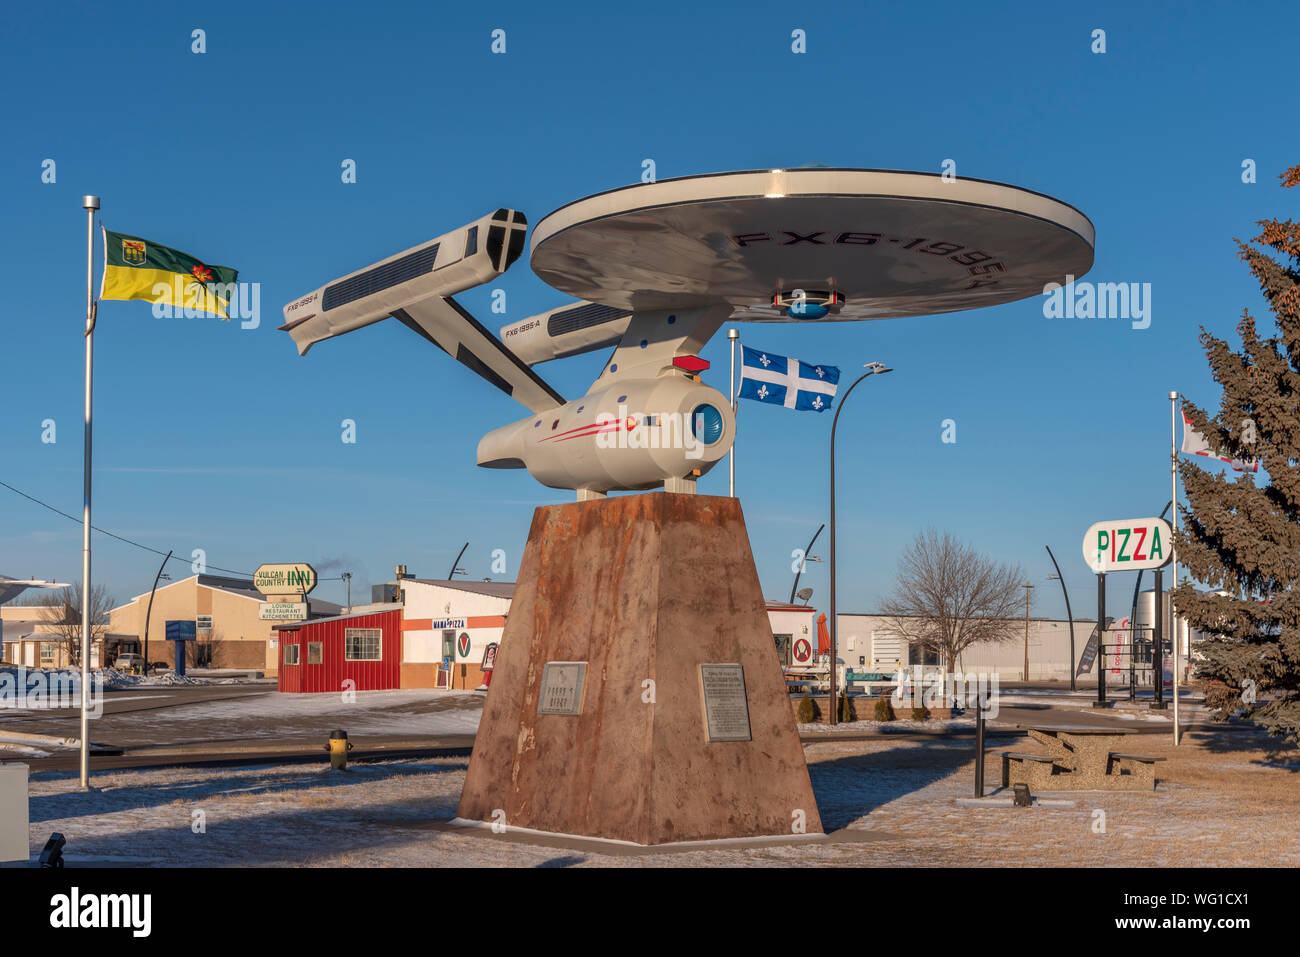 Vulcan, Alberta, Canada - December 31, 2018: Model of the USS Enterprise from the Star Trek movies at the town of Vulcan Alberta. Stock Photo